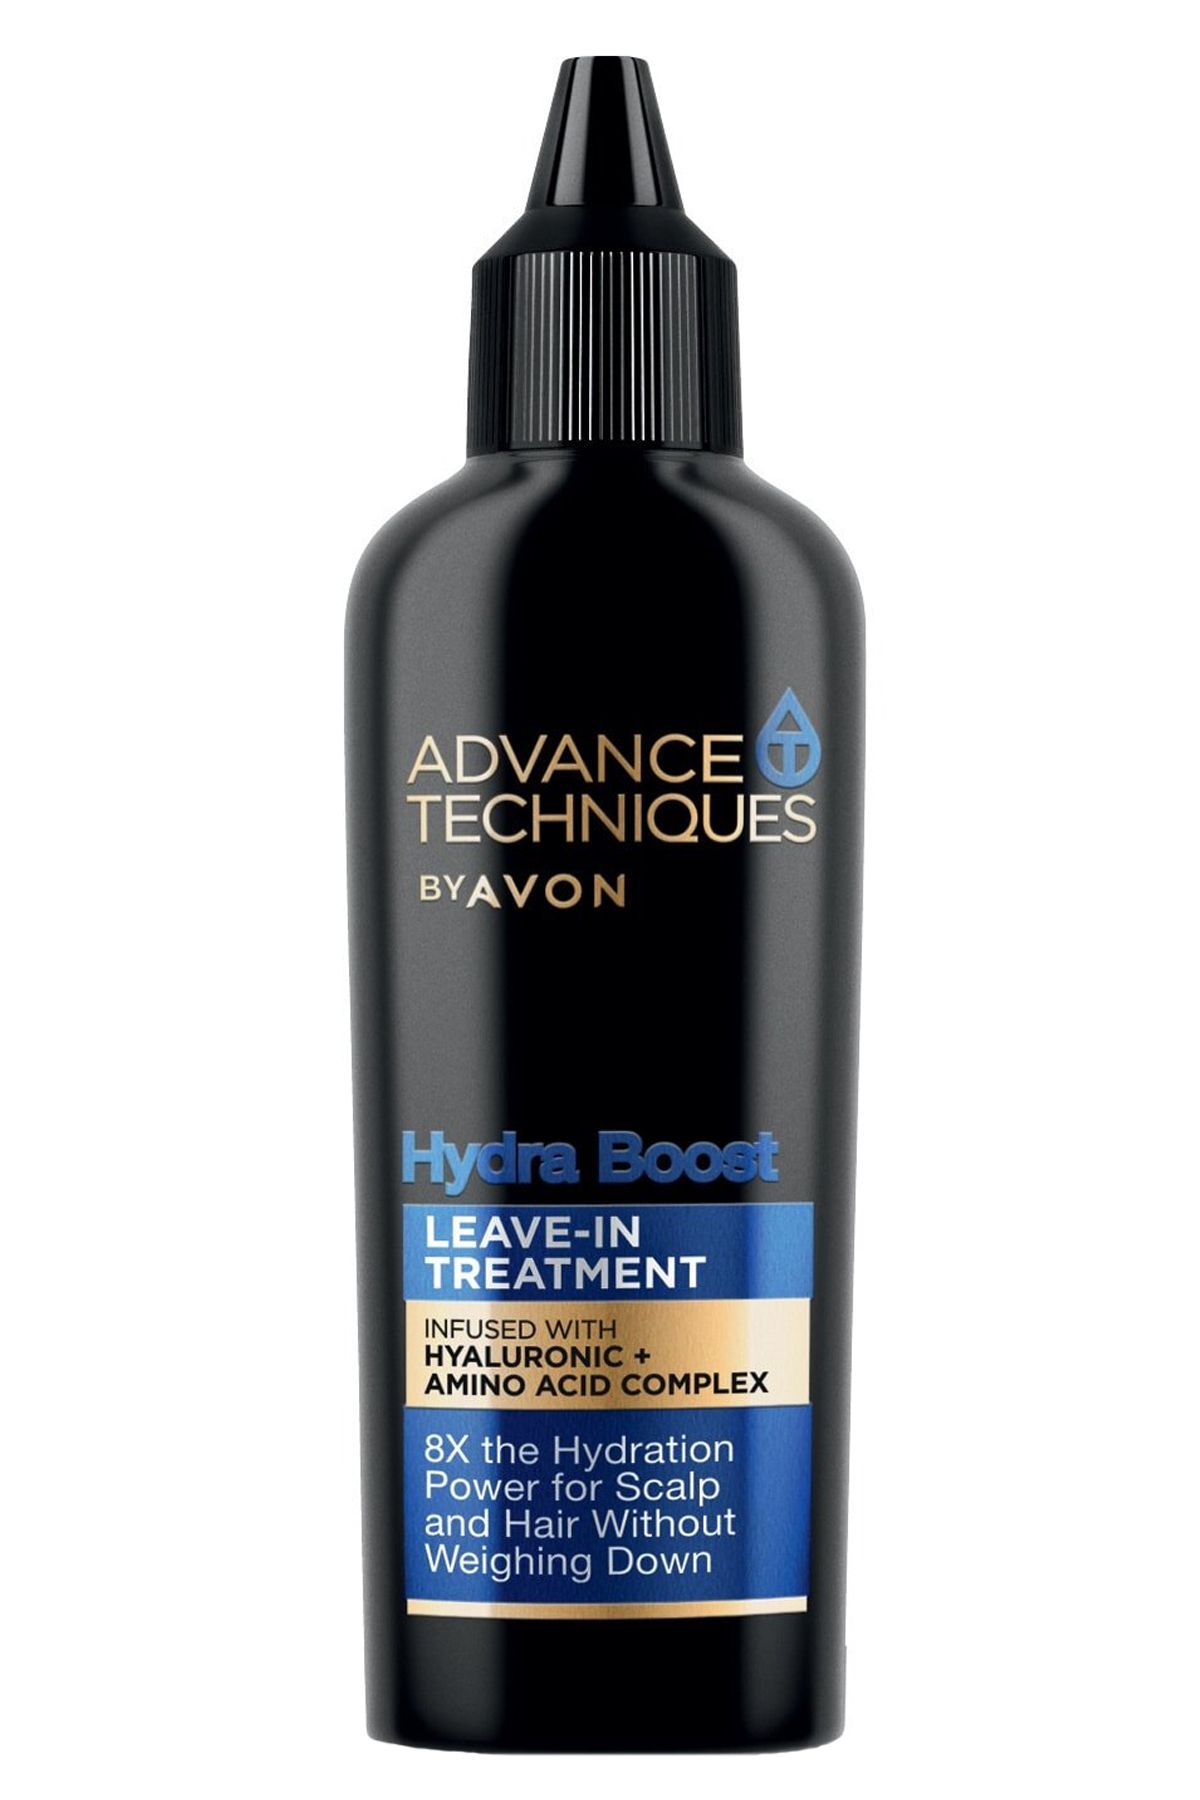 Avon Advance Techniques Hydra Boost Nemlendirici Durulanmayan Saç Bakım Kremi 50 Ml.